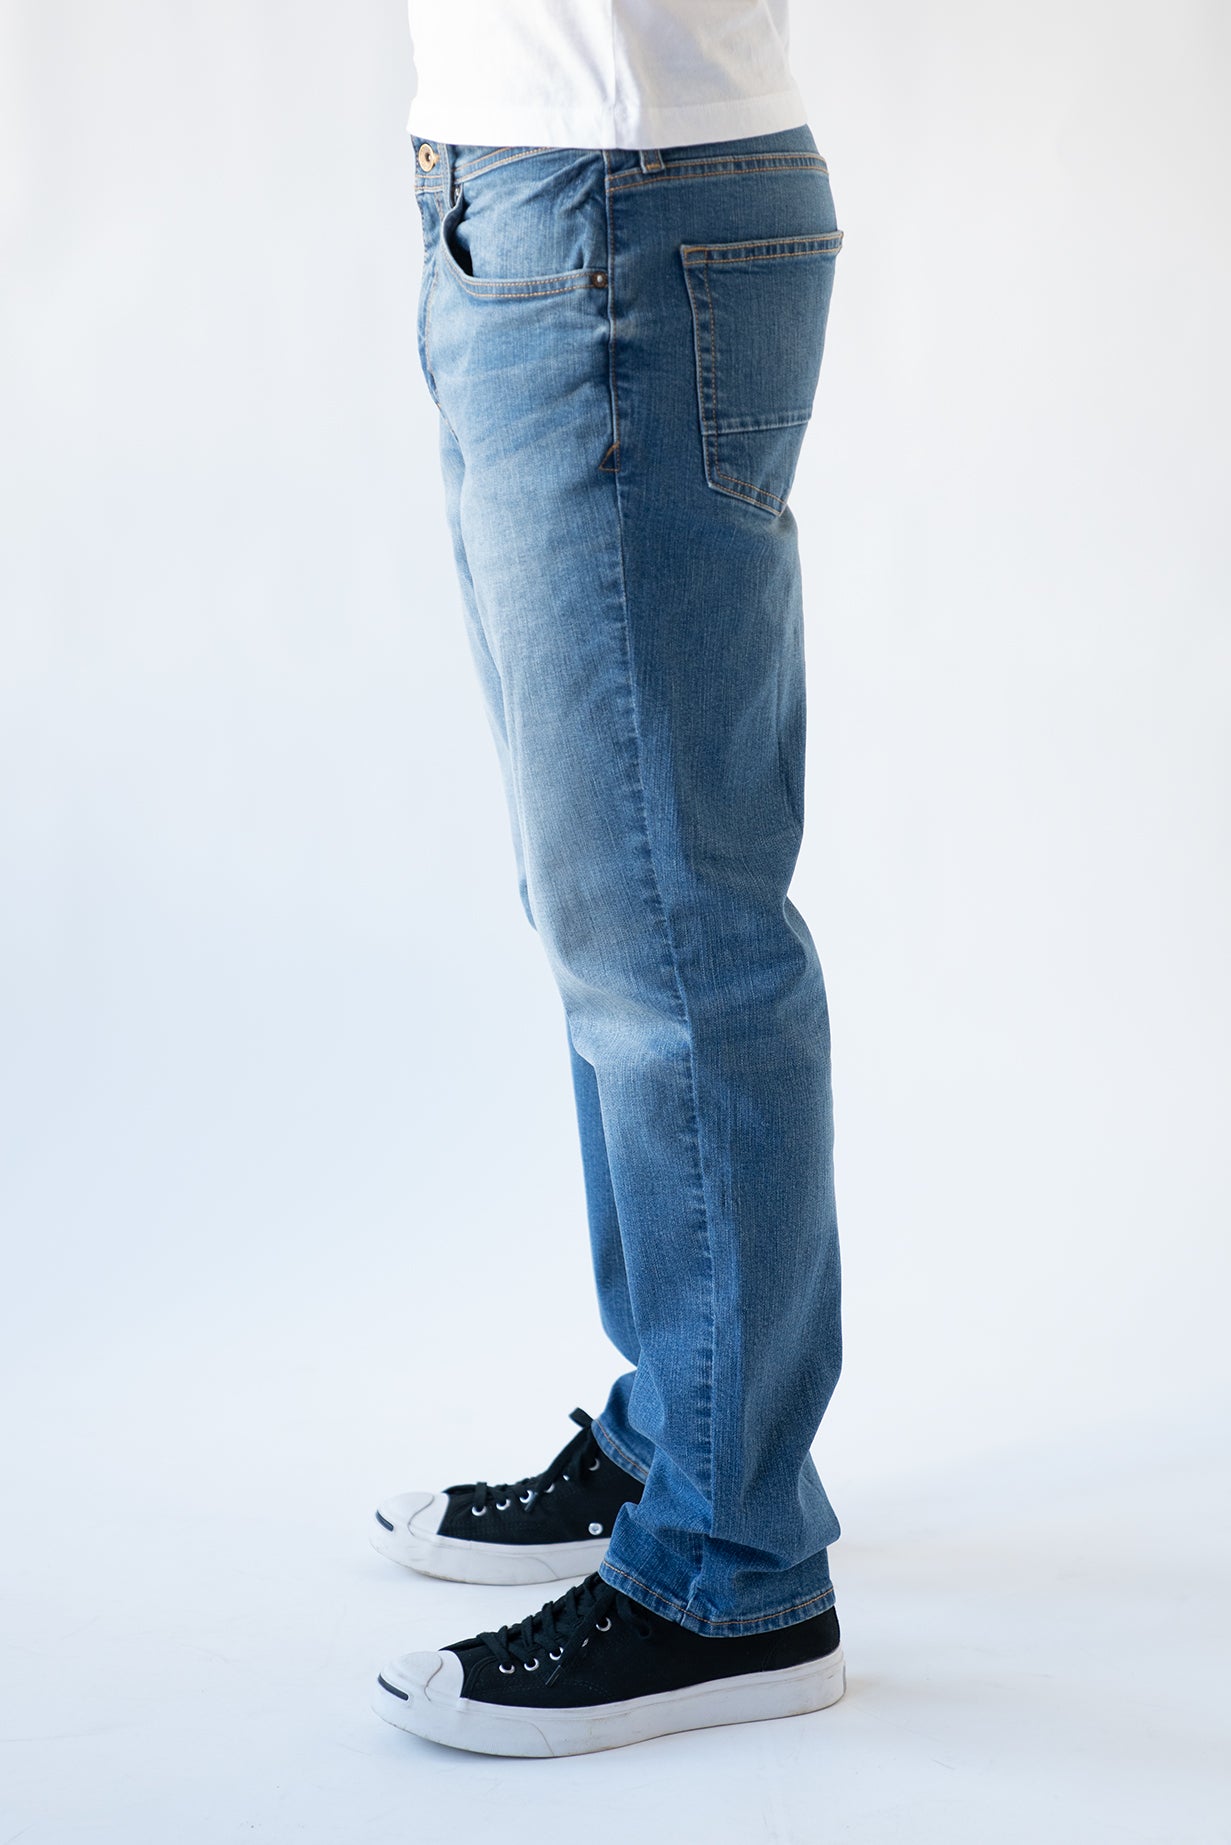 Devil-Dog Dungarees Gates Wash Performance Athletic-Fit Stretch Denim Jeans